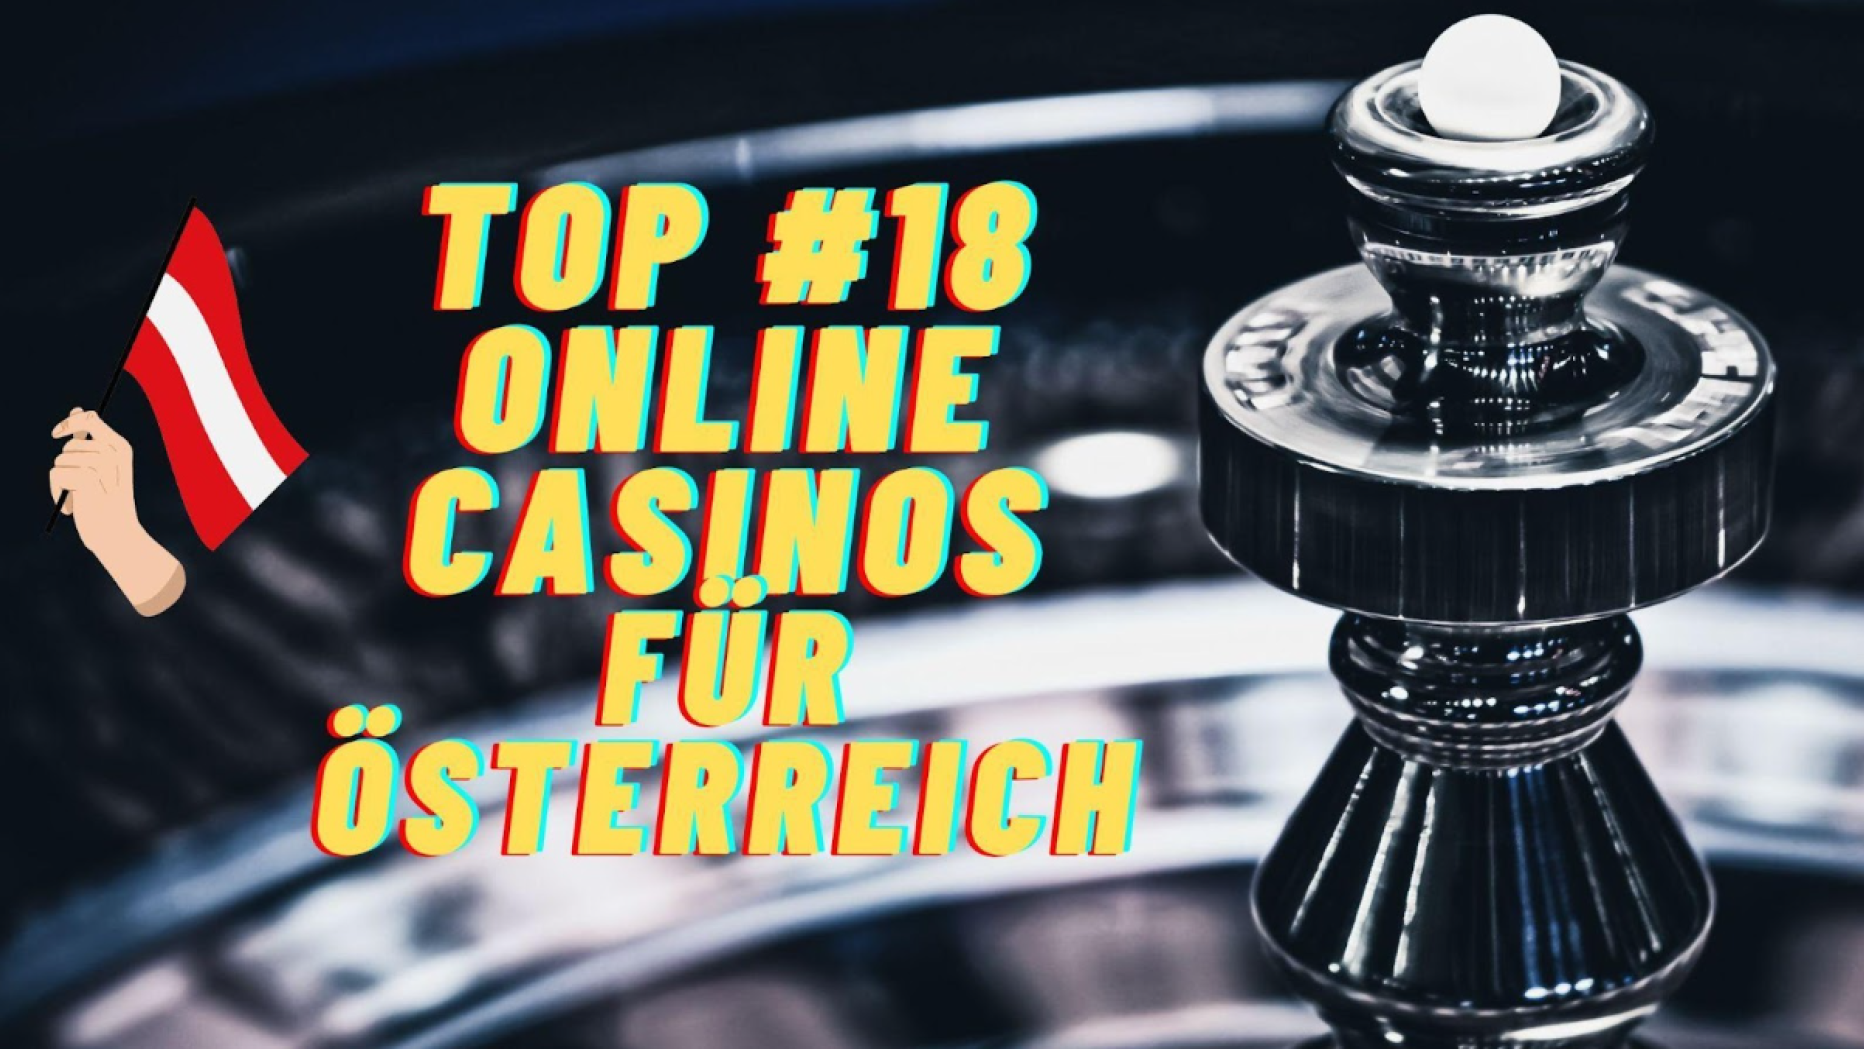 Never Suffer From Online Casinos Österreich Again